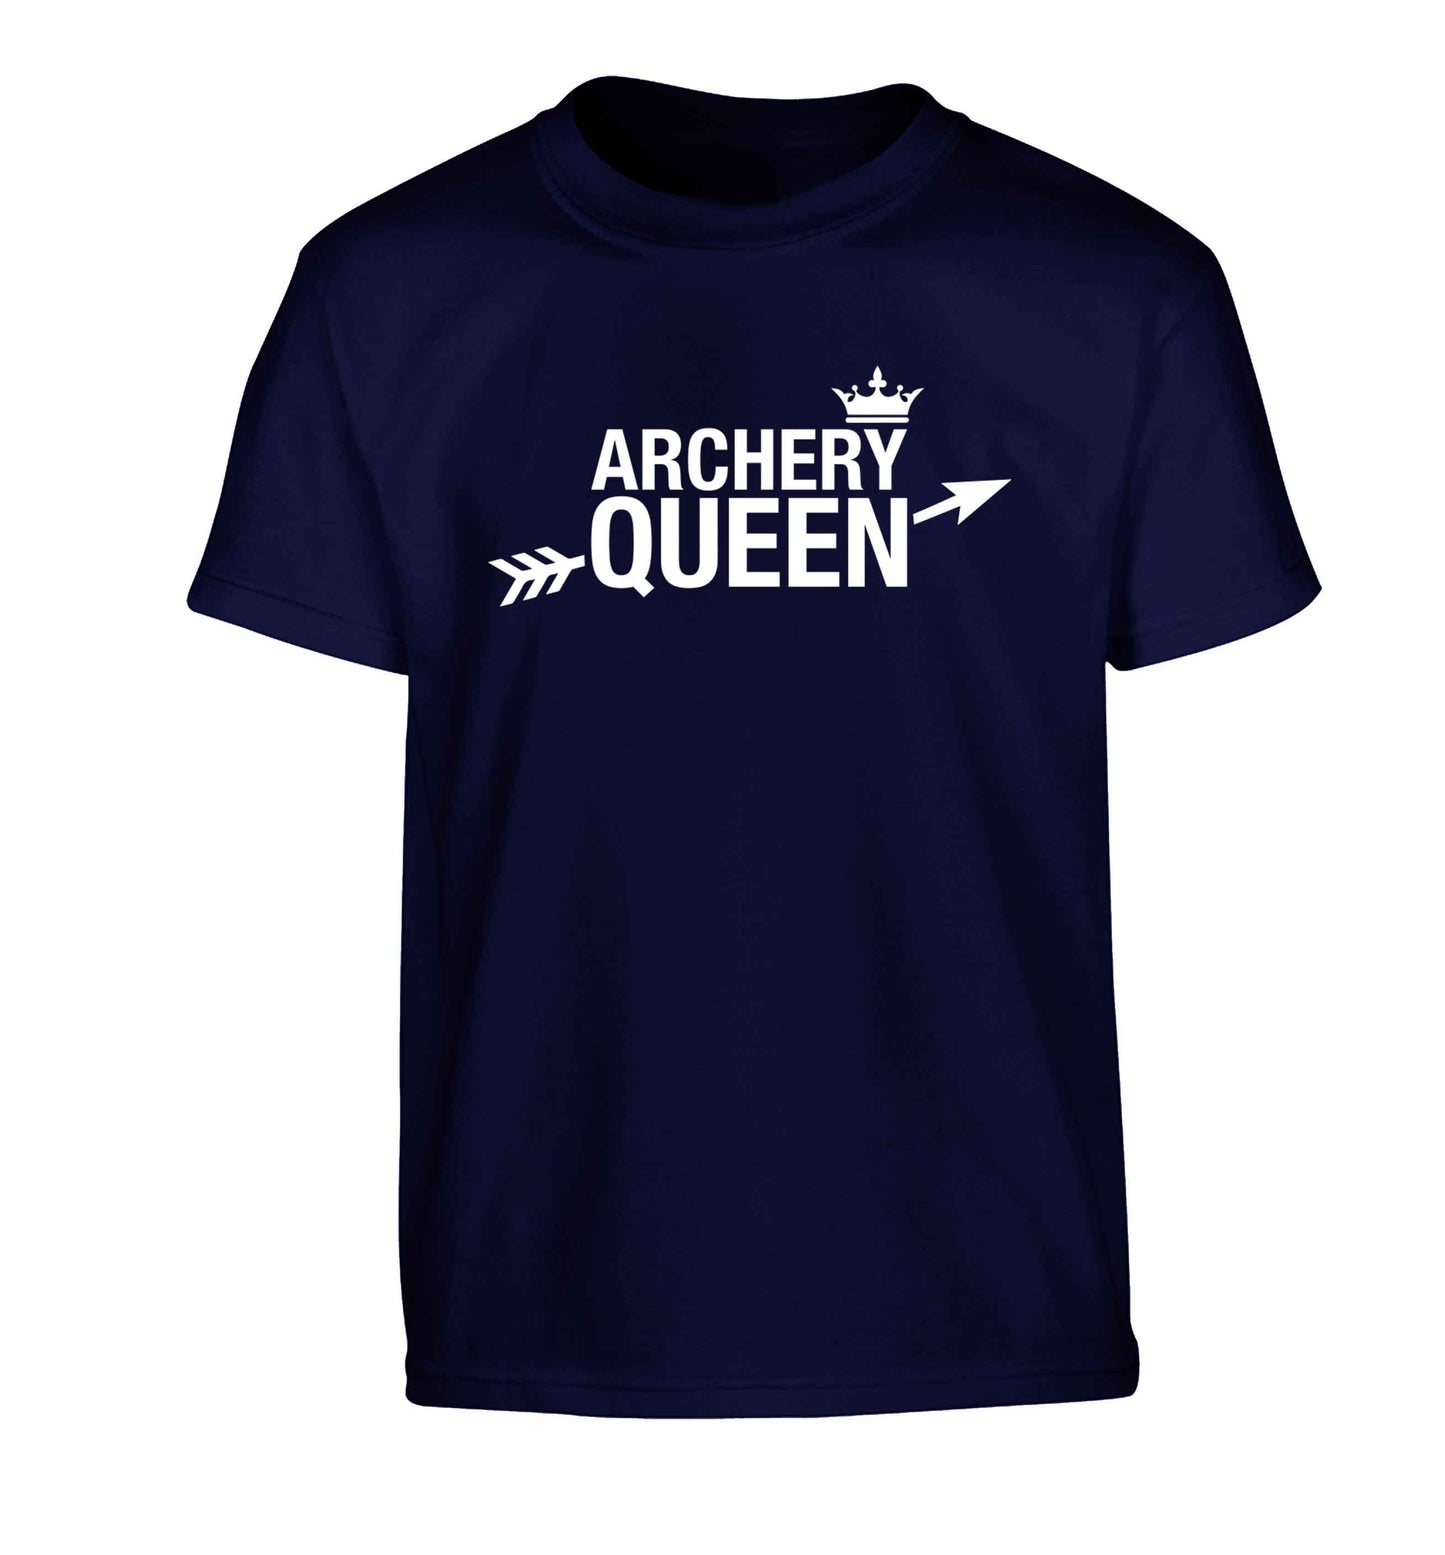 Archery queen Children's navy Tshirt 12-13 Years